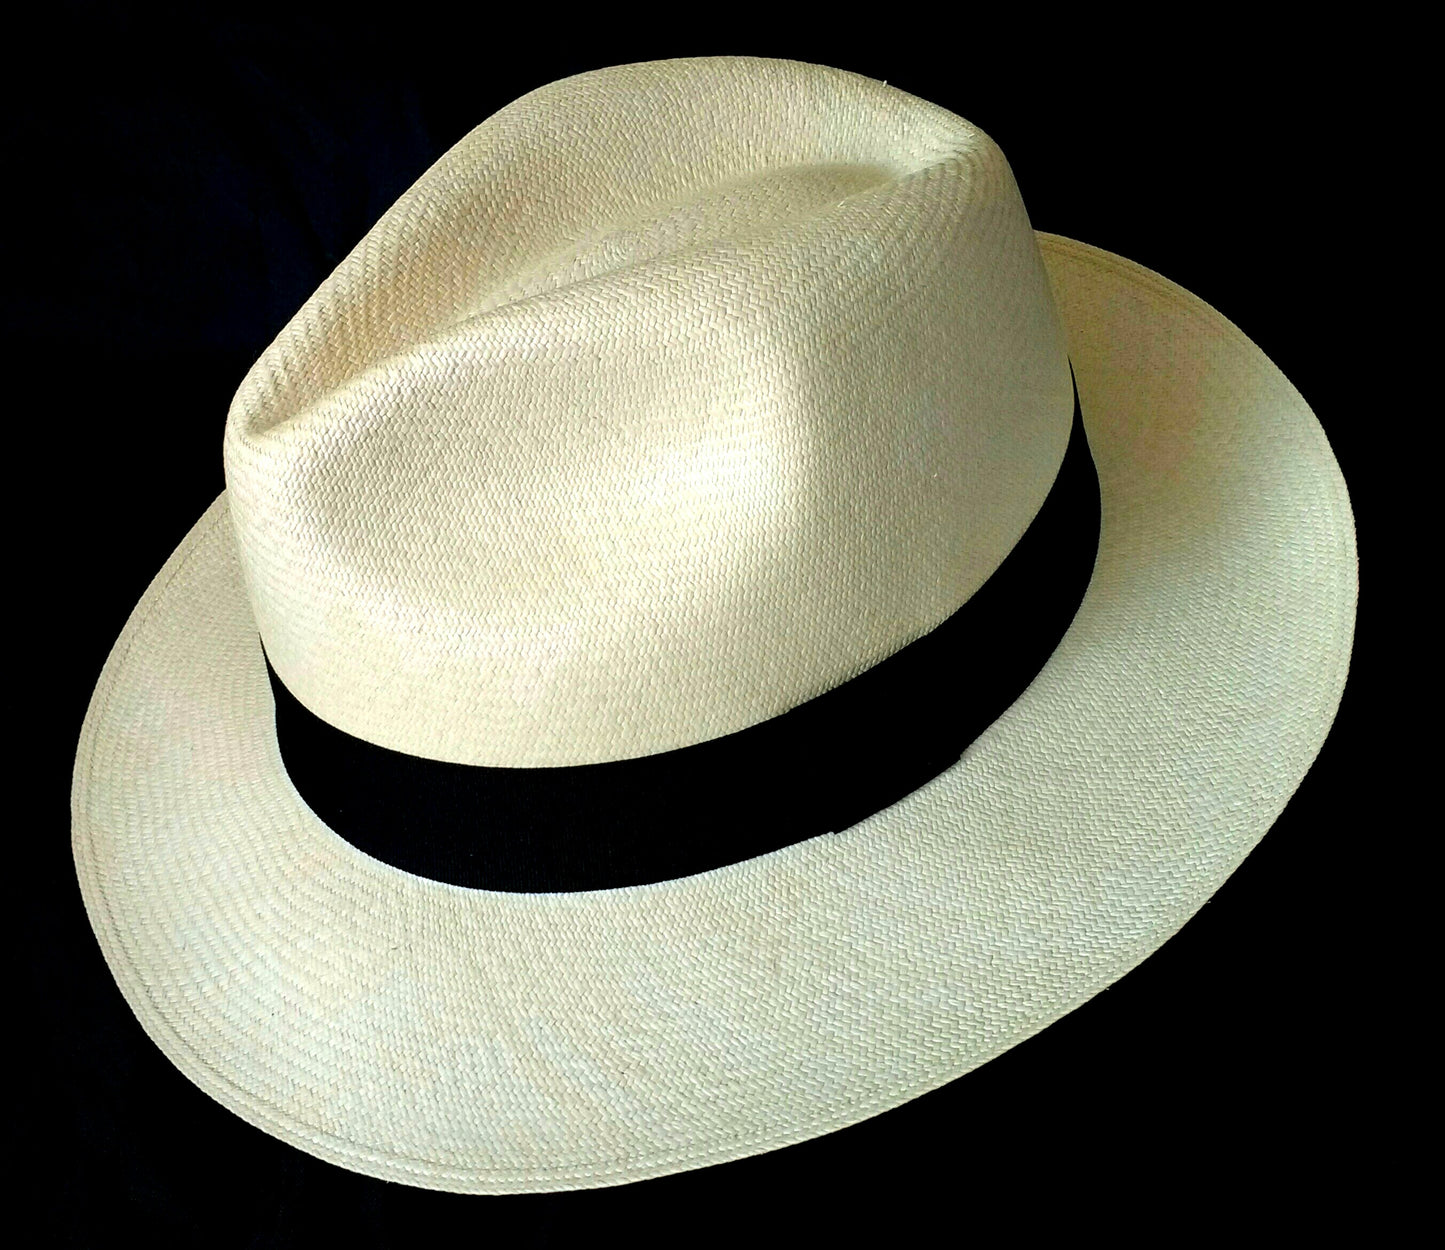 Genuine Montecristi Panama Hat - in Natural